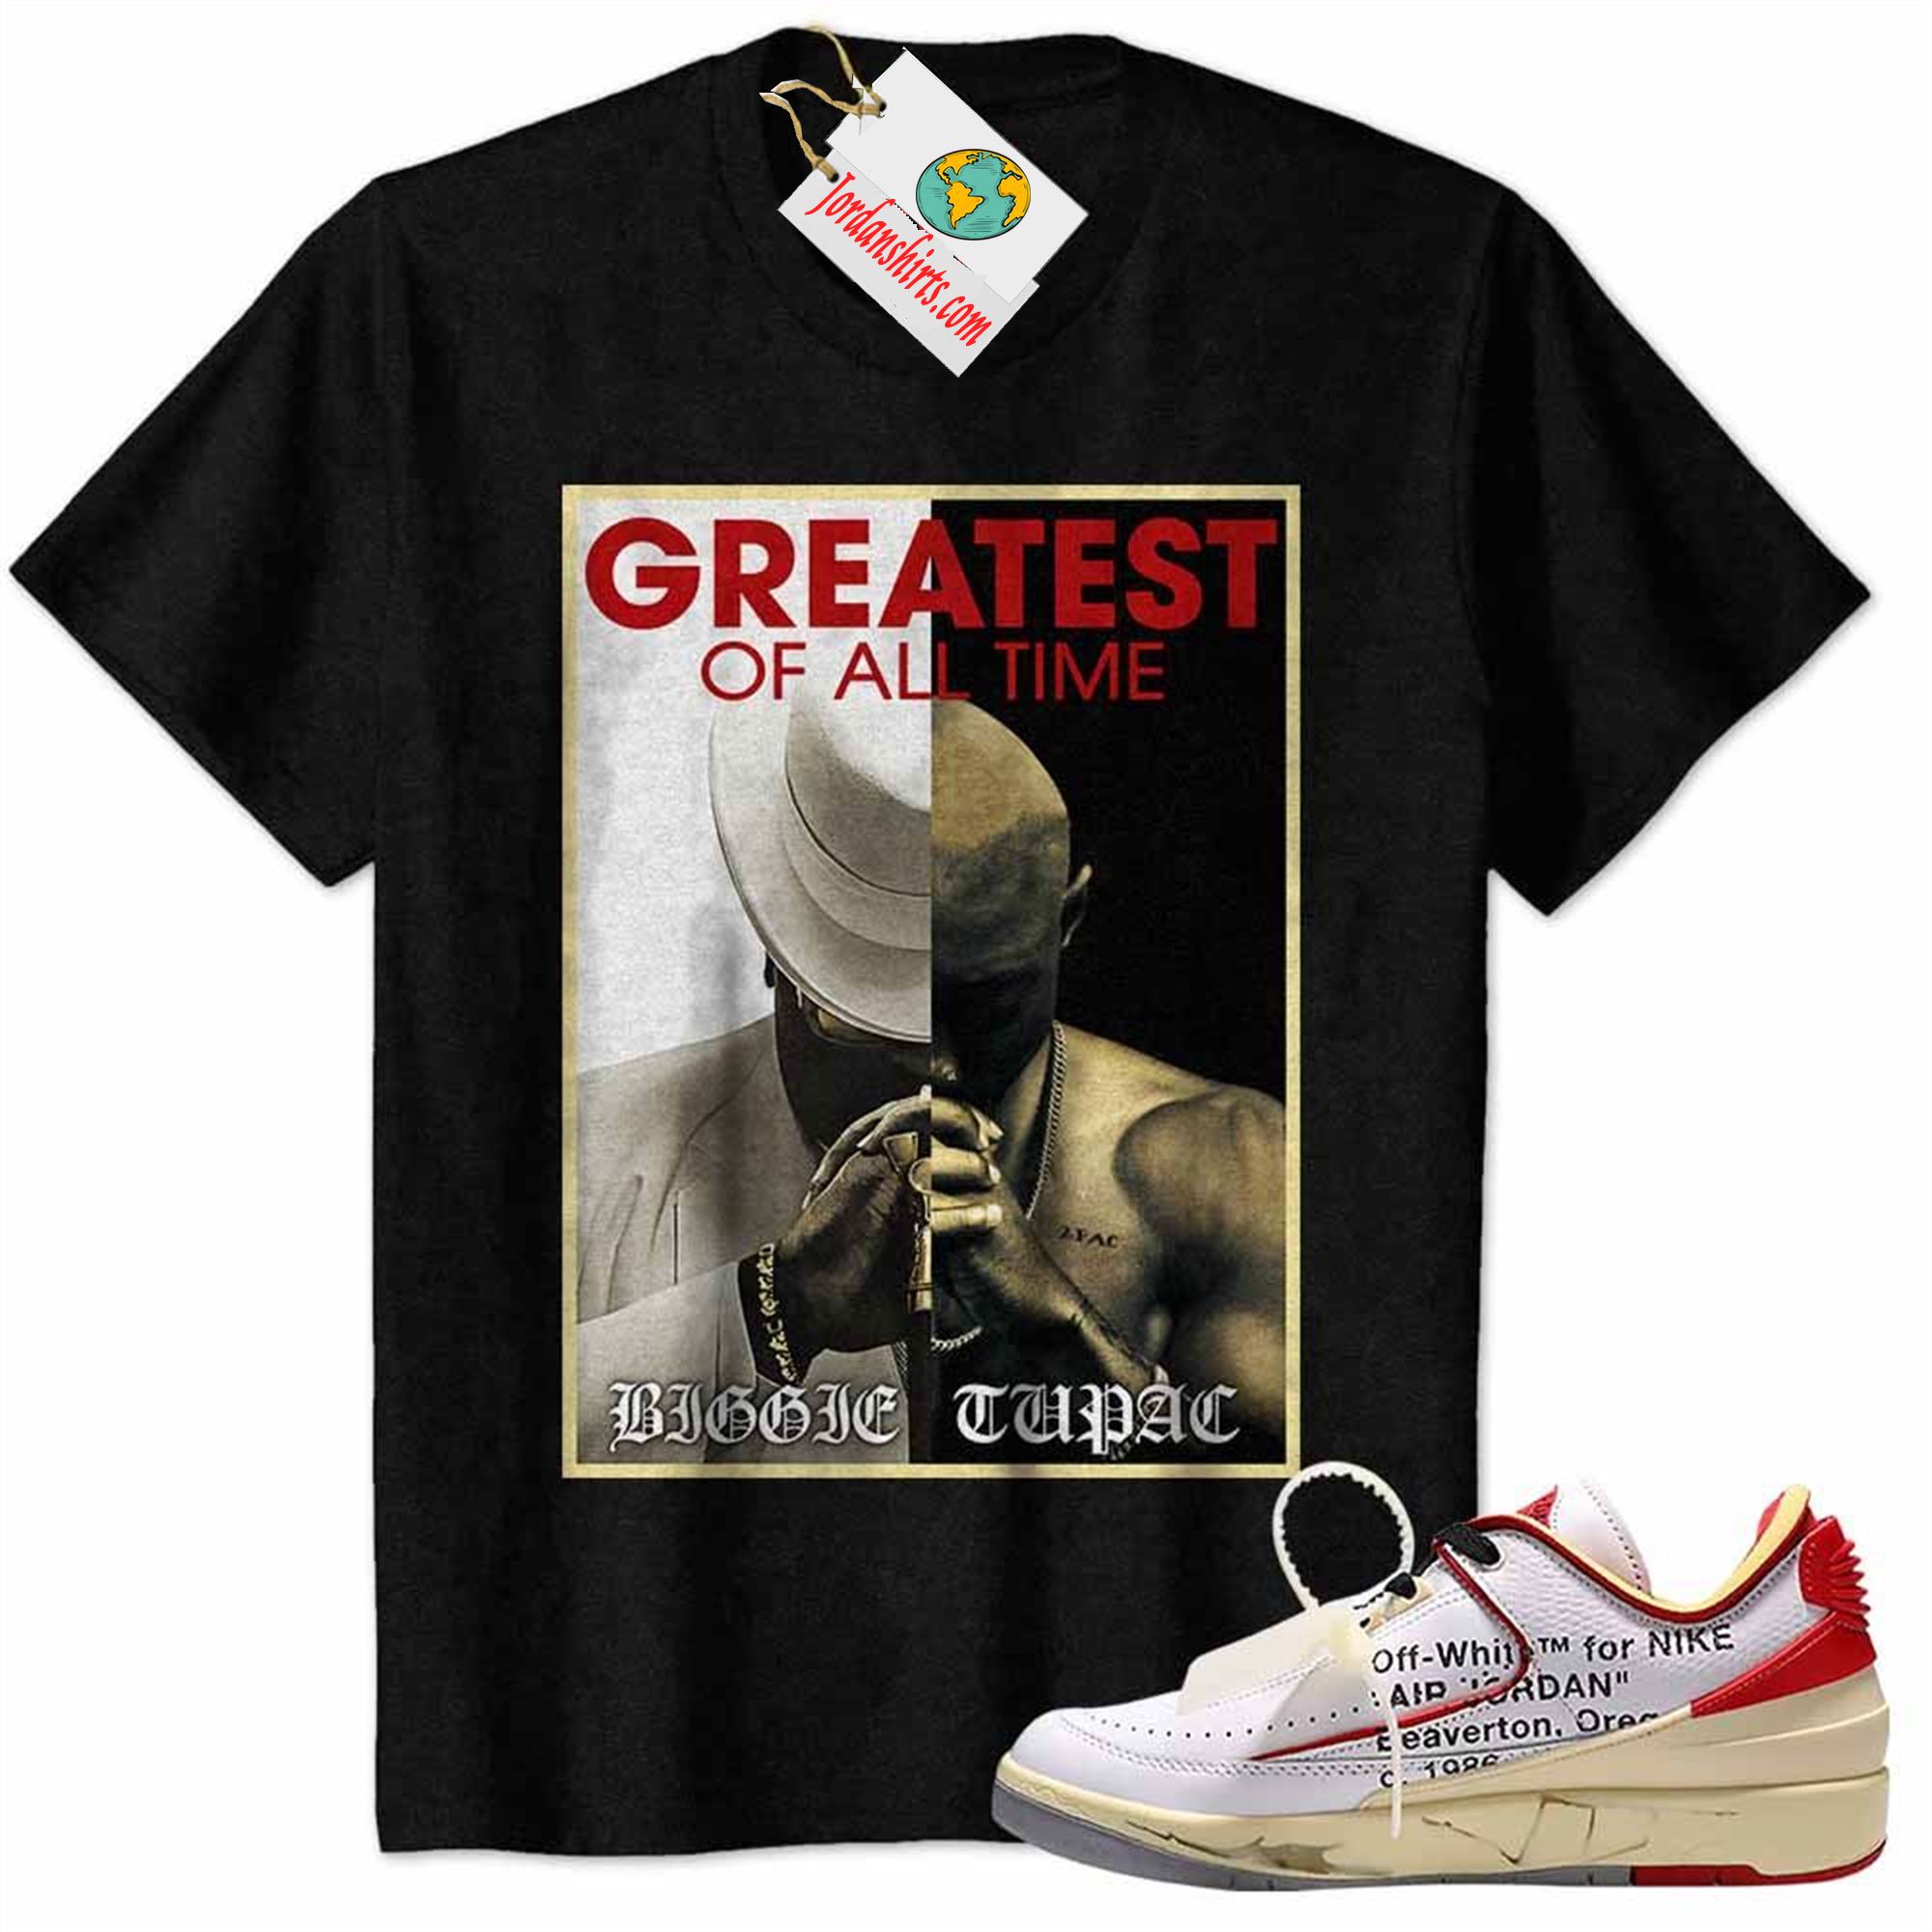 Jordan 2 Shirt, Tupac Shakur Notorious Big Biggie 2pac Greatest Of All Time Black Air Jordan 2 Low White Red Off-white 2s Plus Size Up To 5xl